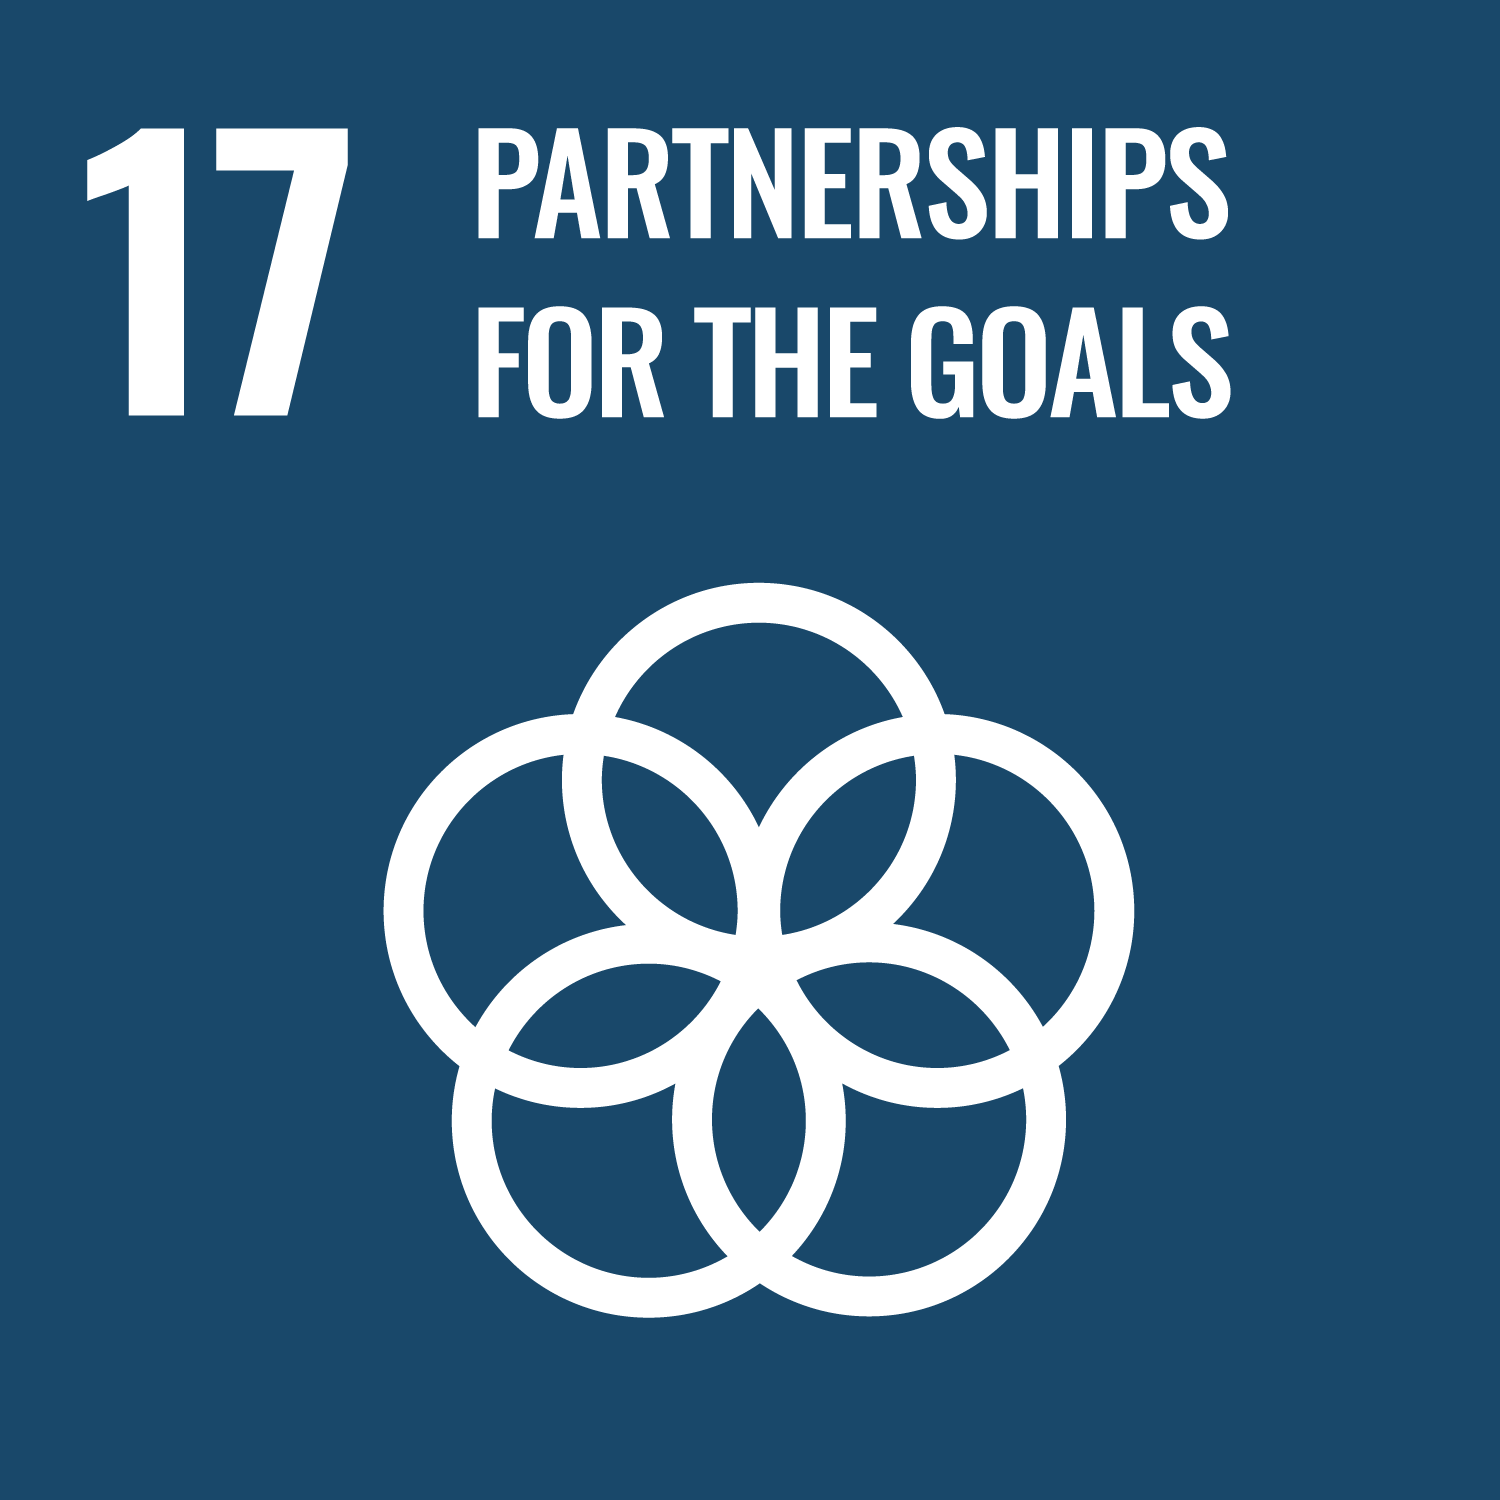 Goal 17 Partnerships for the Goals